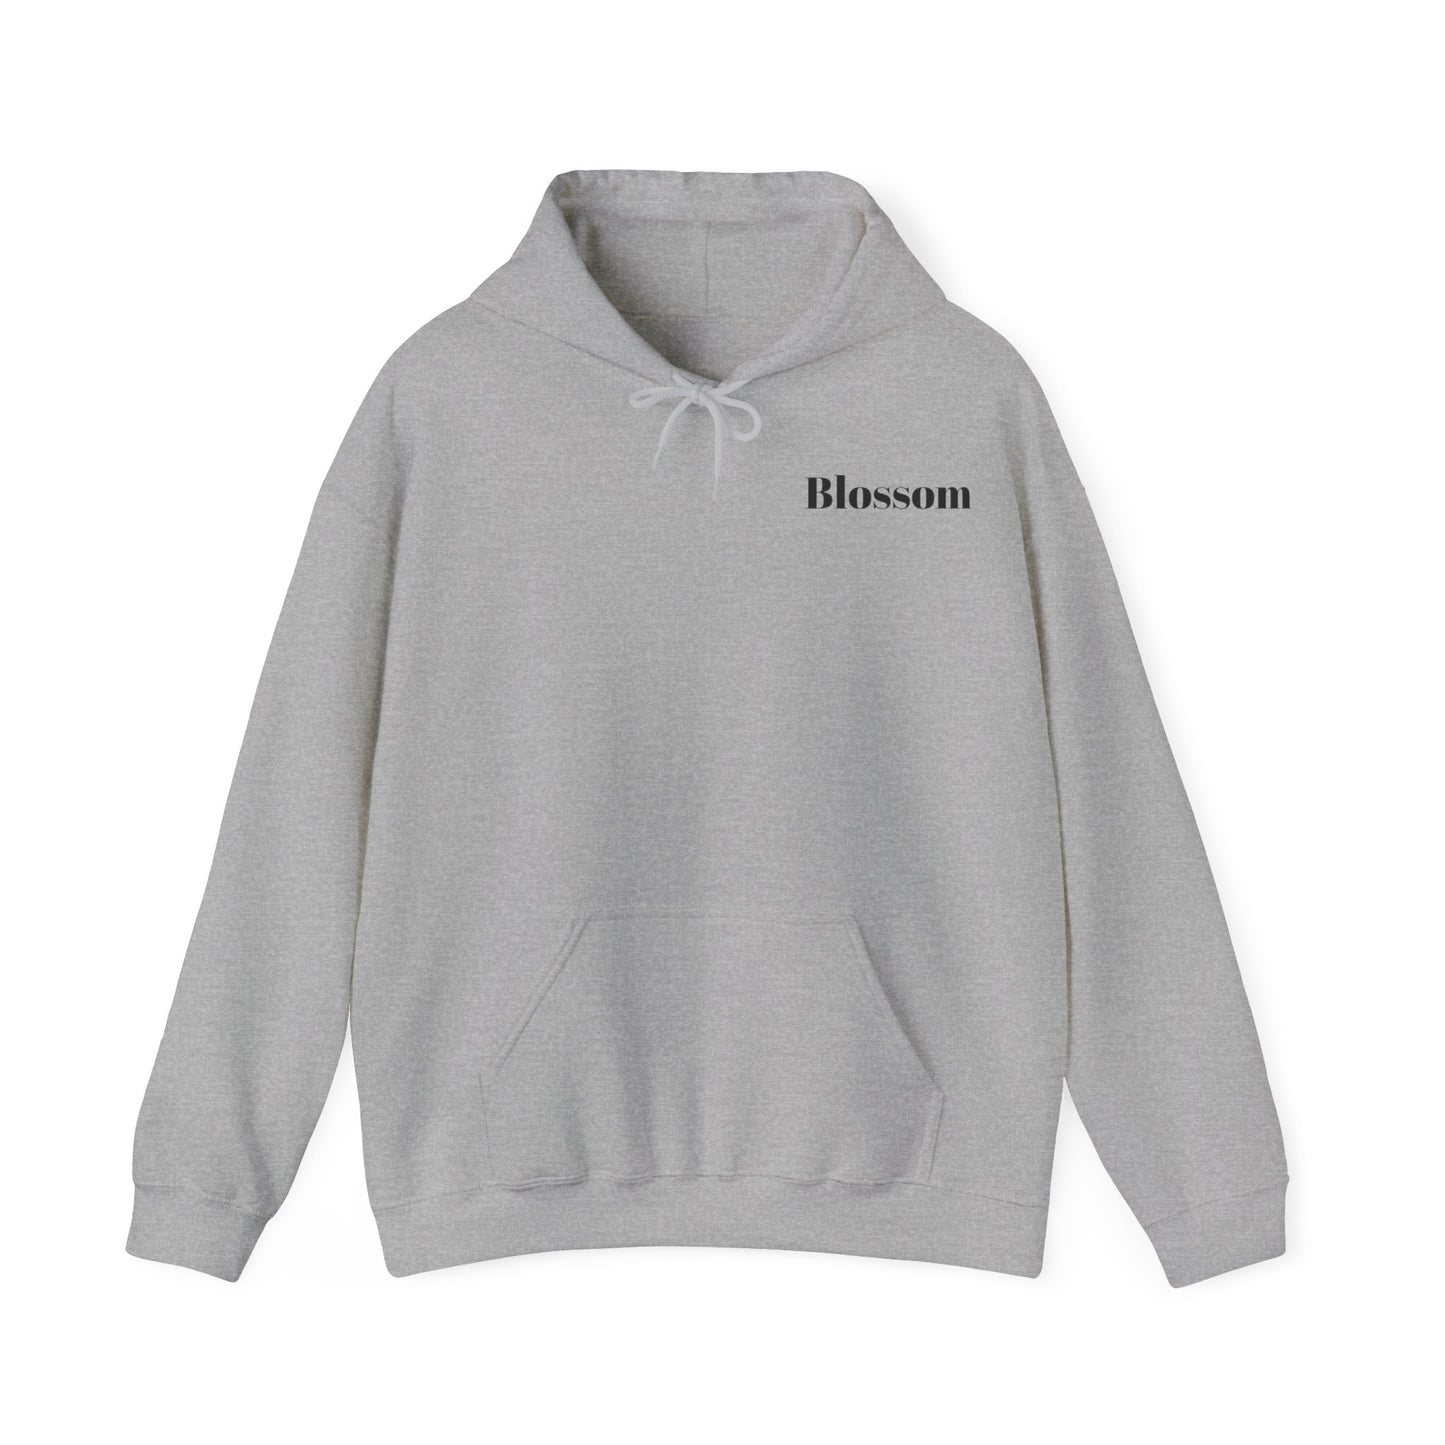 Blossom Unisex Hooded Sweatshirt with Heavy Blend Fabric0